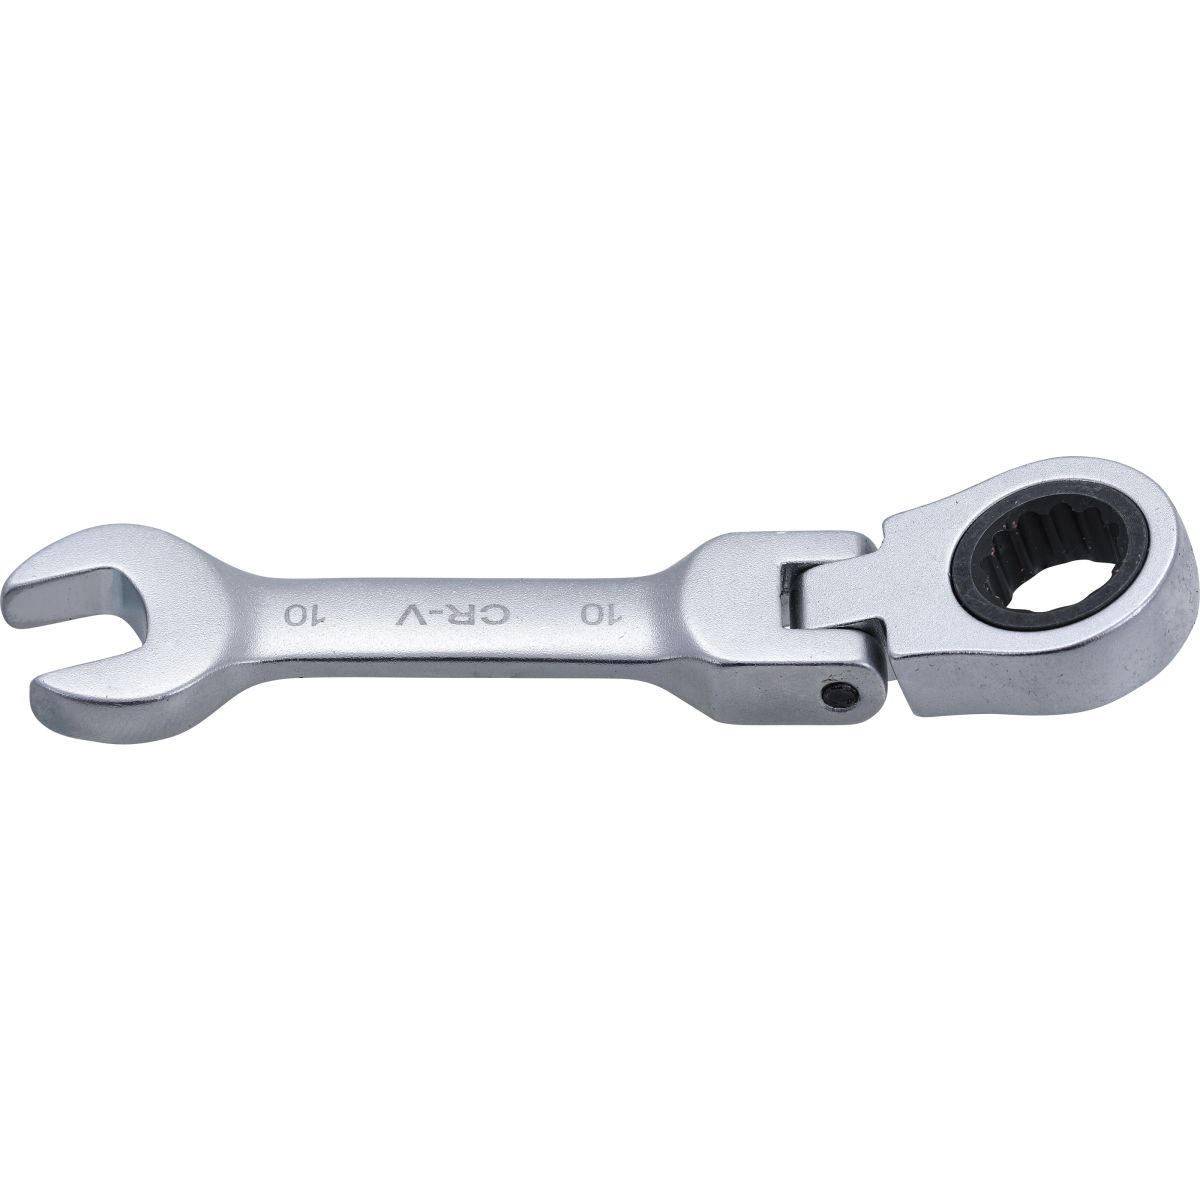 Ratchet Combination Wrench | short | adjustable | 10 mm